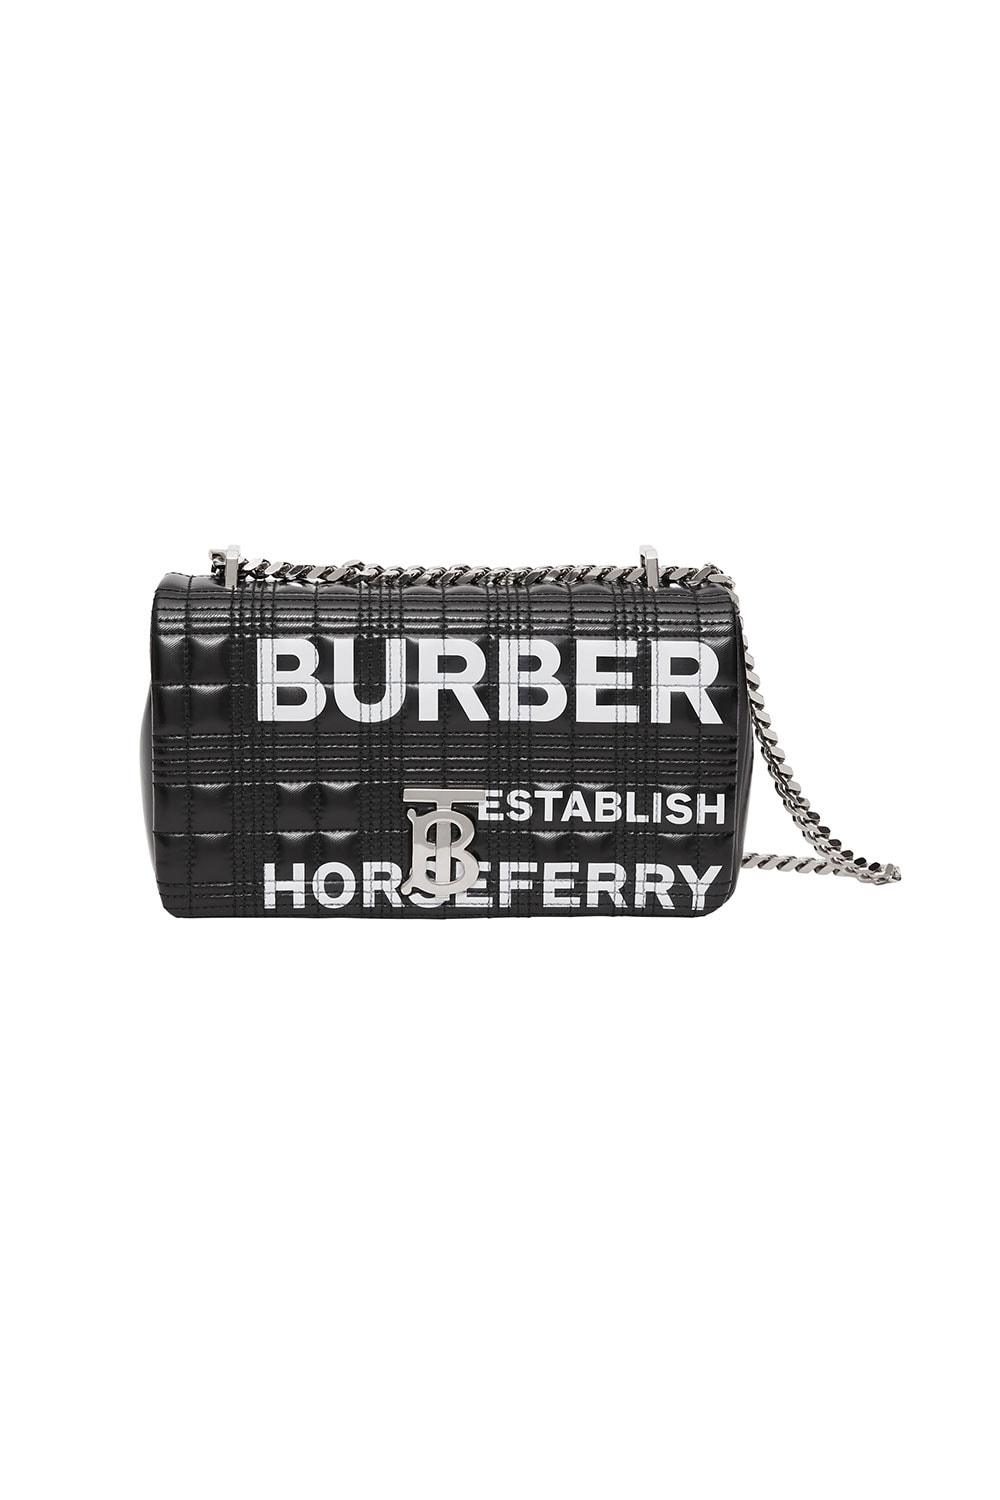 burberry lola bags purses clutches fall winter riccardo tisci